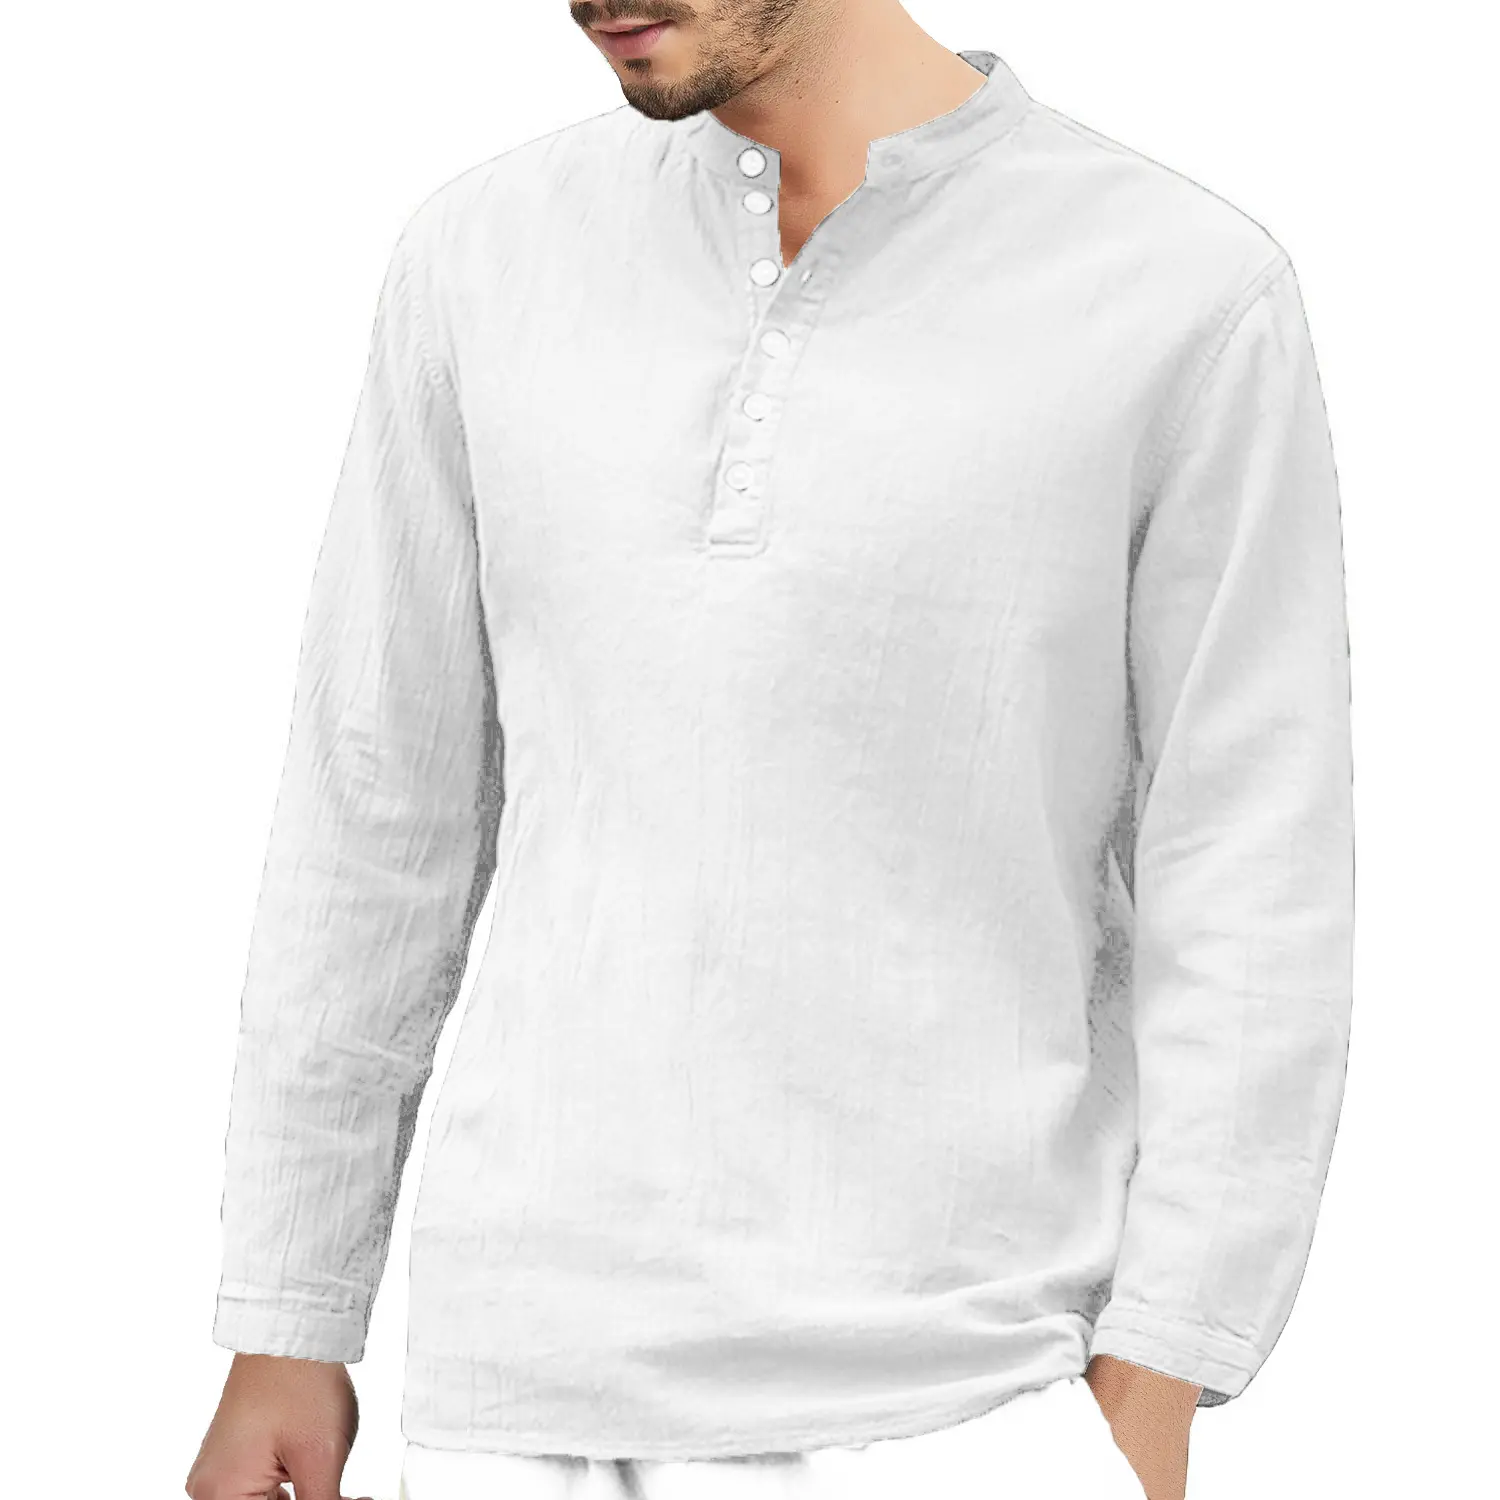 Baju Pria Lengan Panjang Kualitas Tinggi, Kemeja Polo Putih, Baju Katun Rami Tanpa Kerah